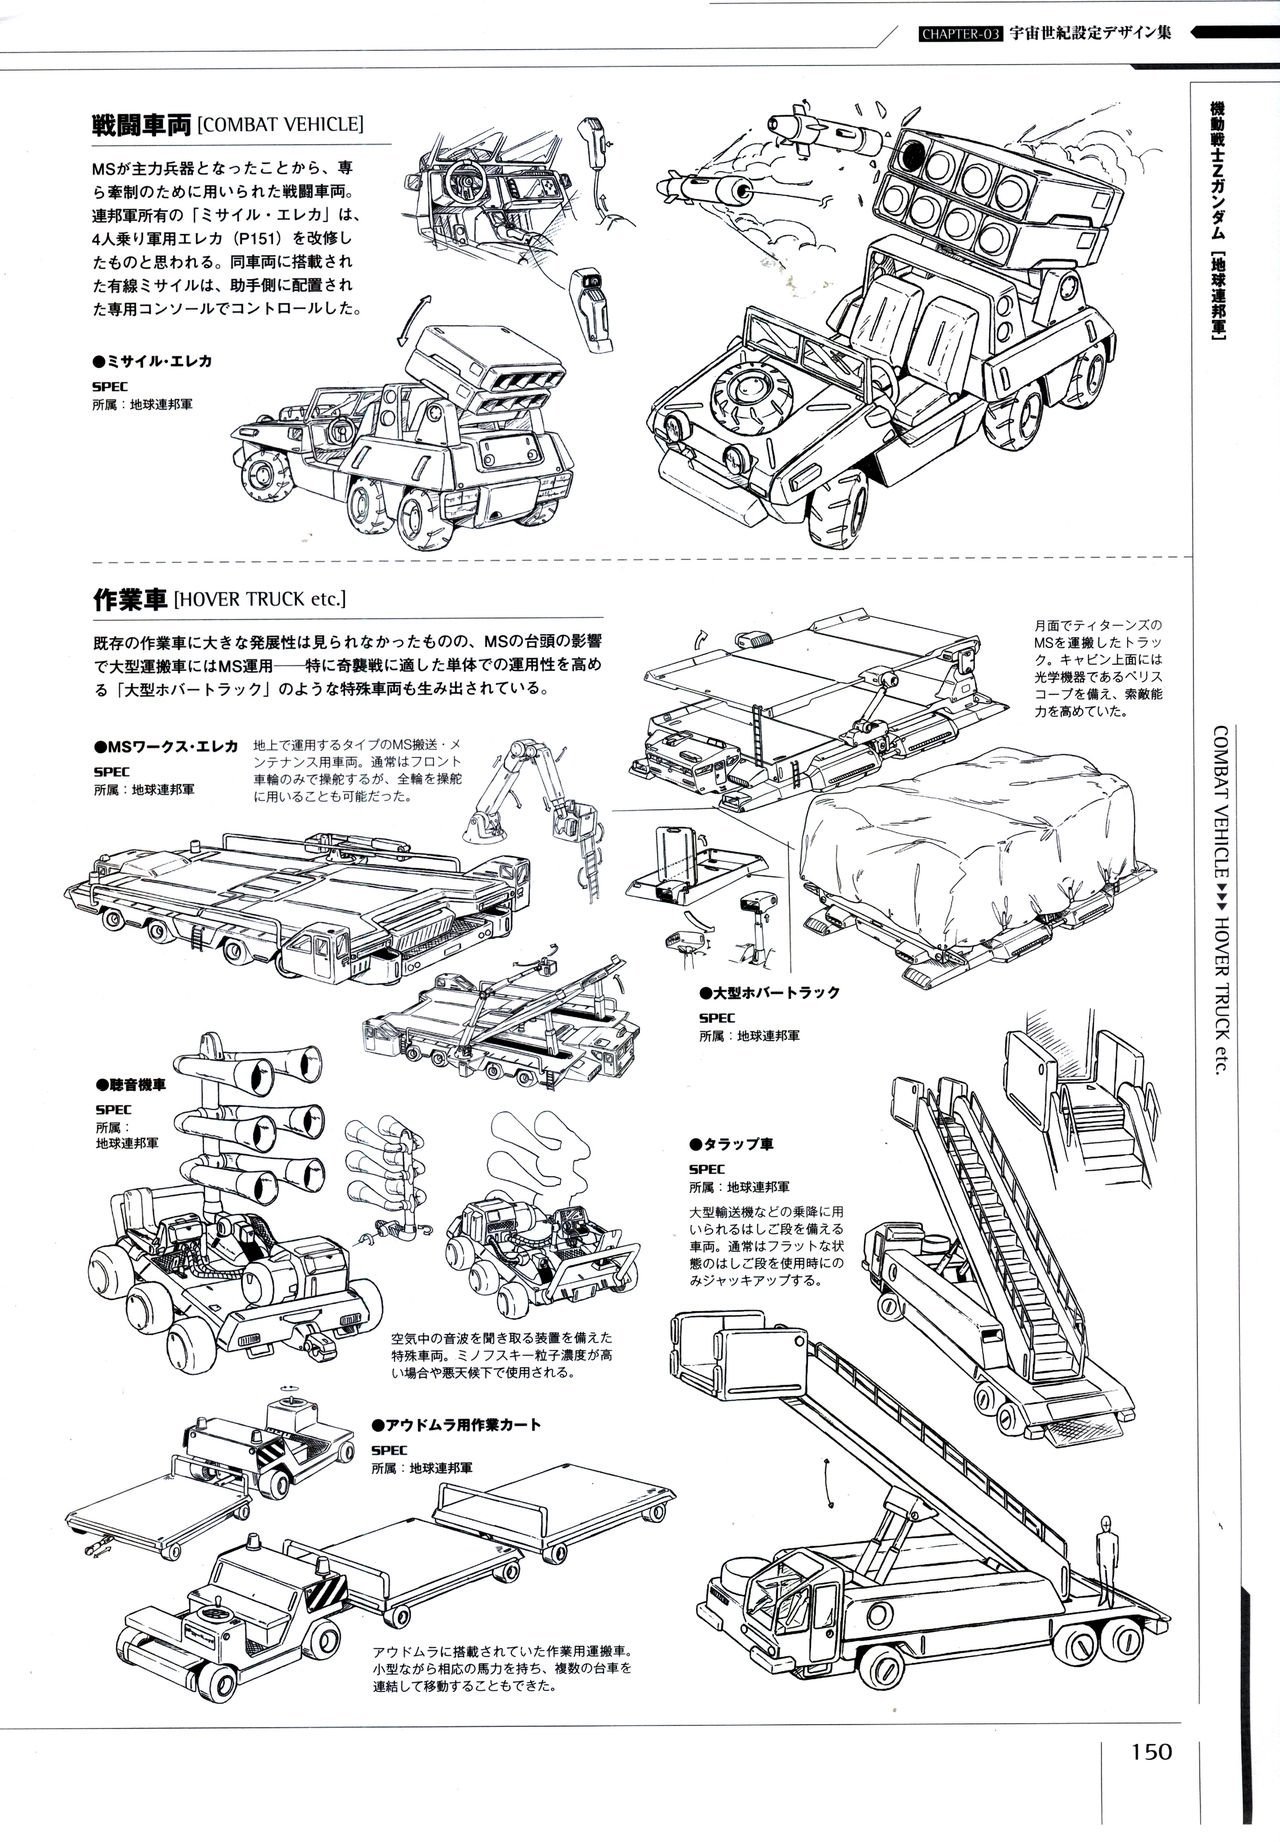 Mobile Suit Gundam - Ship & Aerospace Plane Encyclopedia - Revised Edition 155